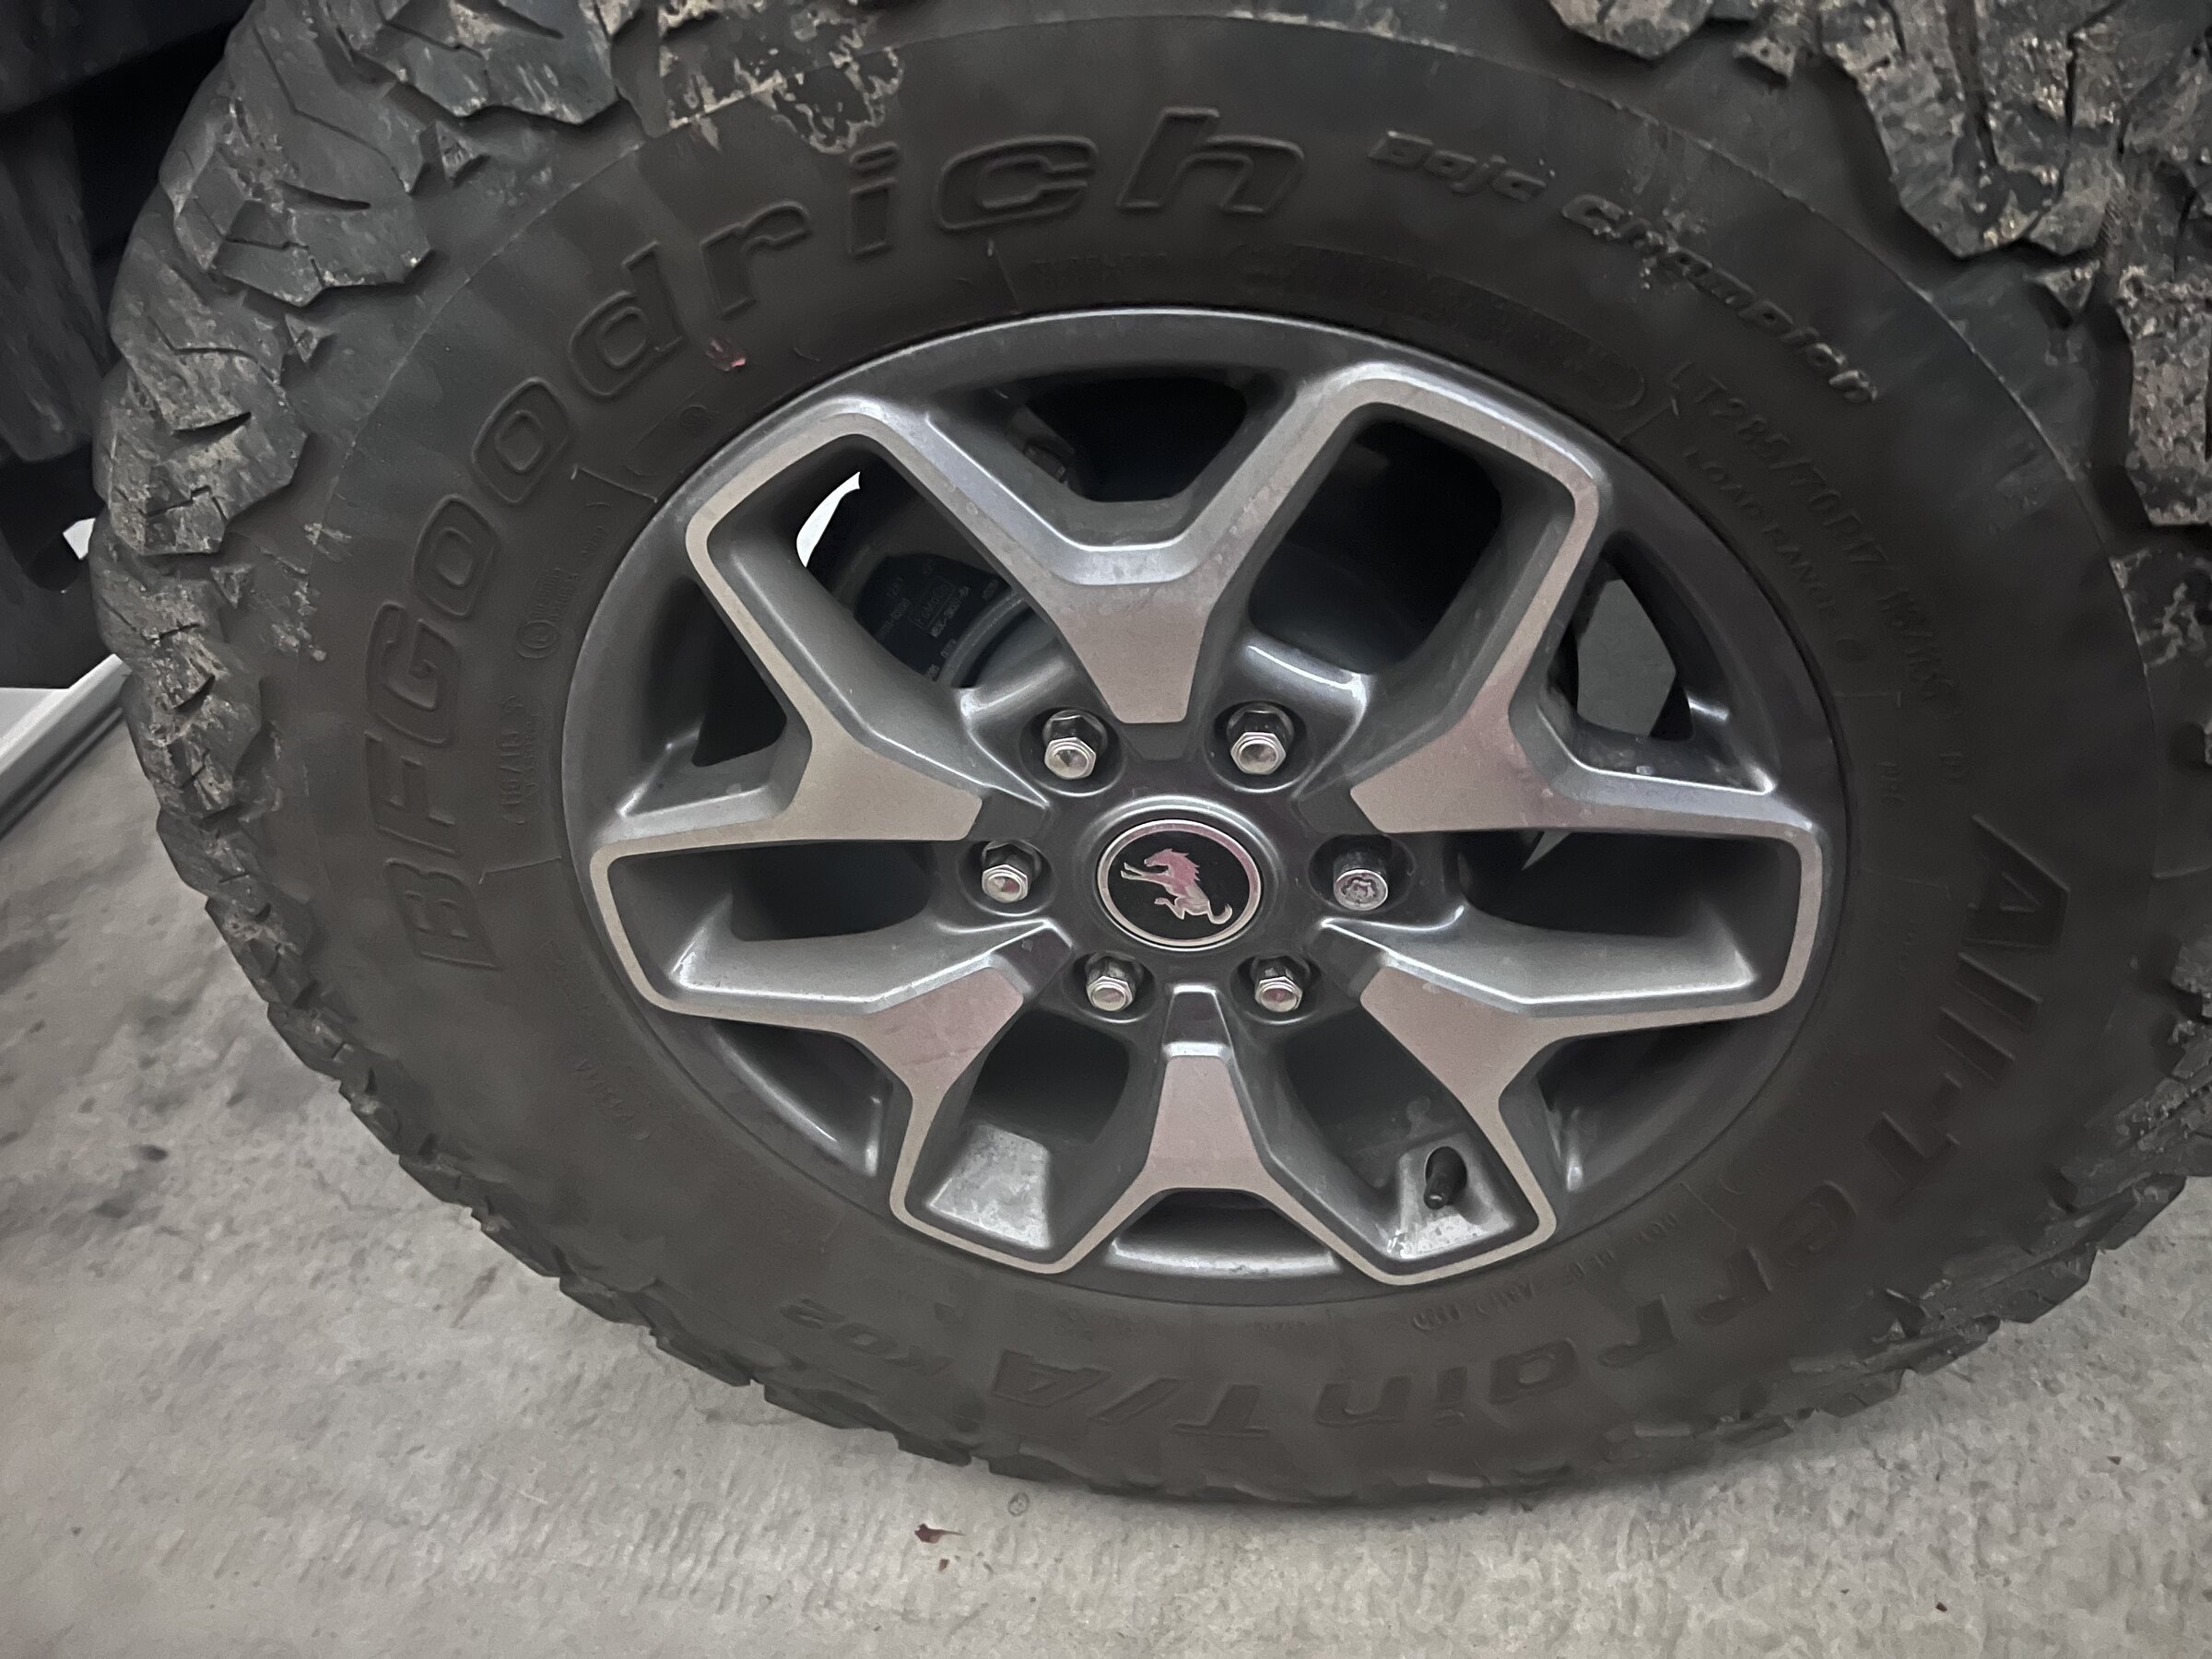 Ford Bronco Badlands wheels $200 813569A2-C6E9-40B9-8377-39B5D86A2380